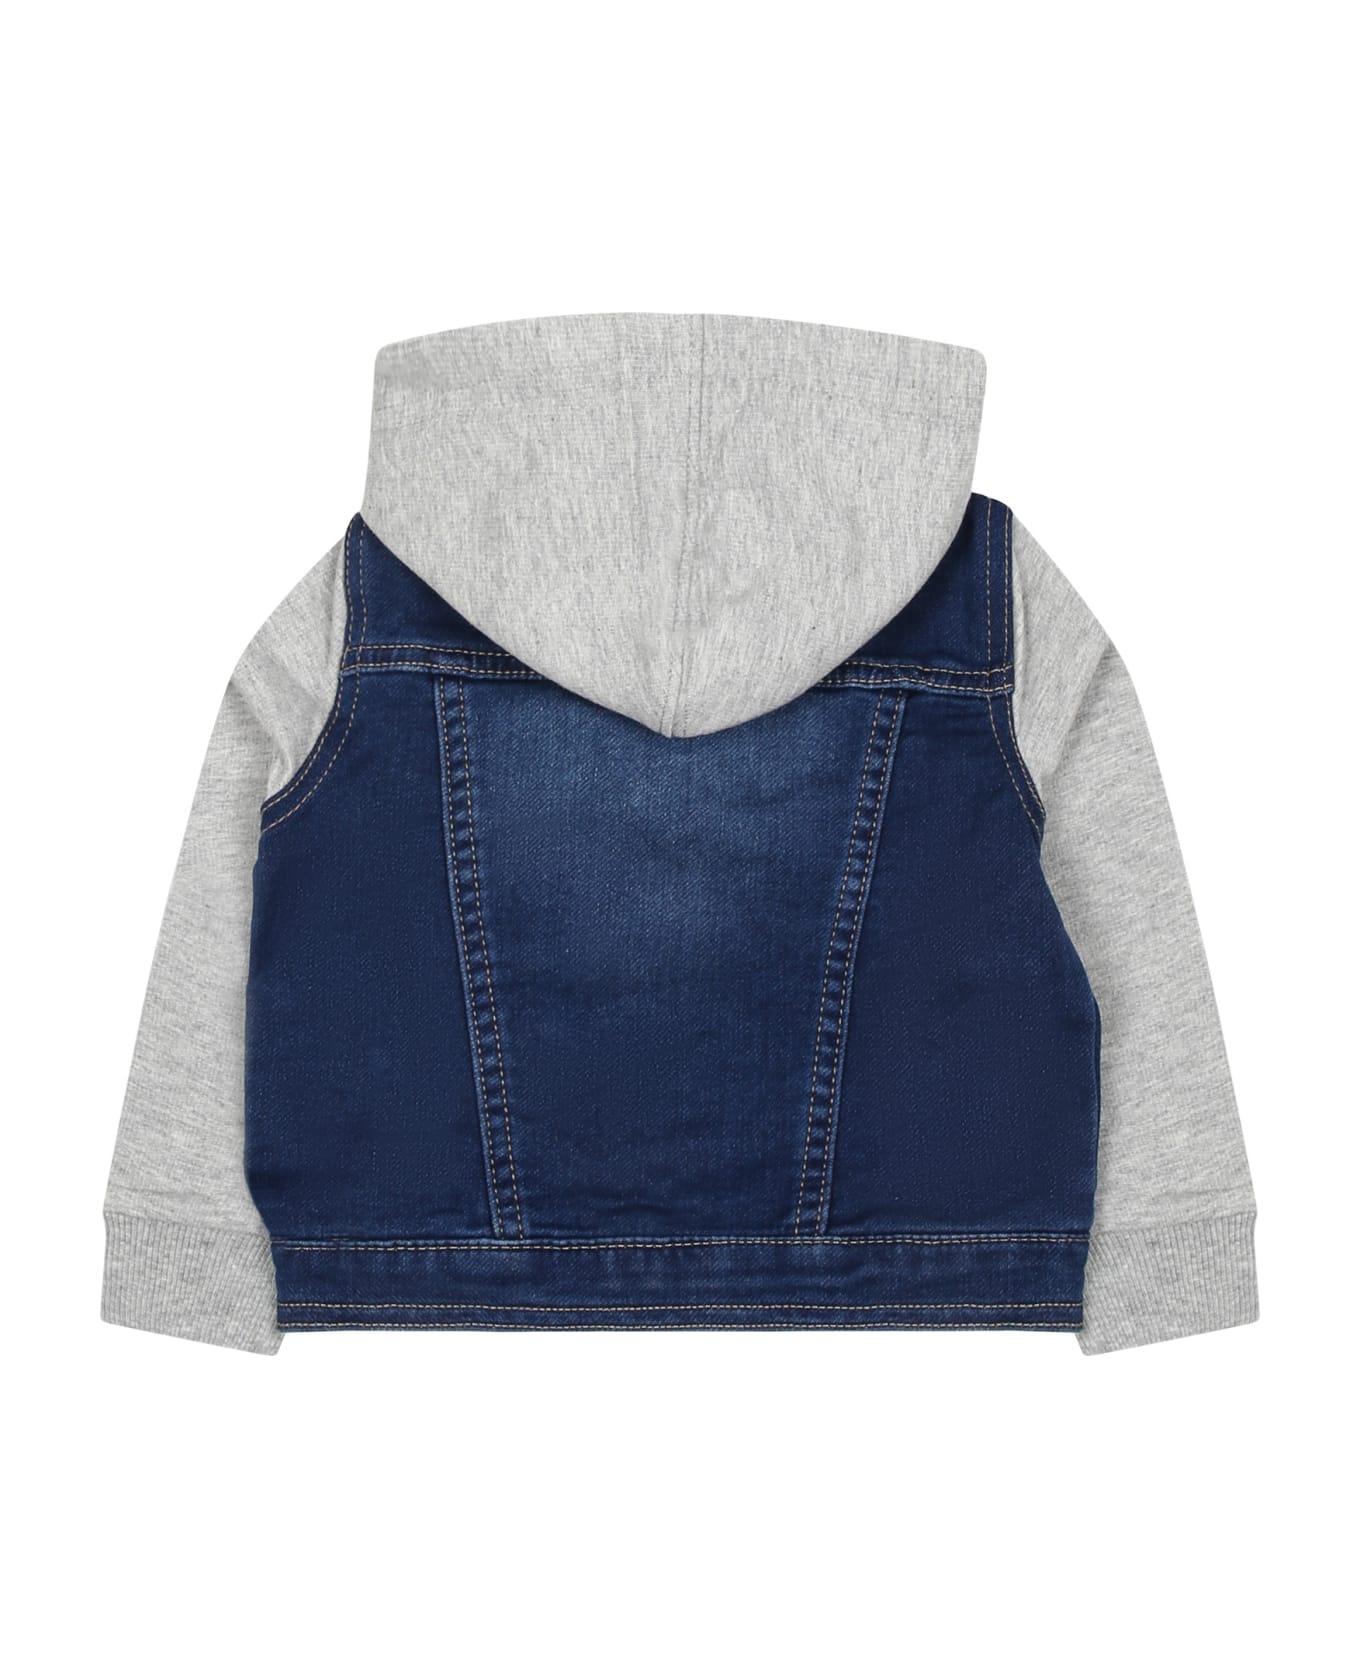 Levi's Denim Jacket For Baby Boy - Denim